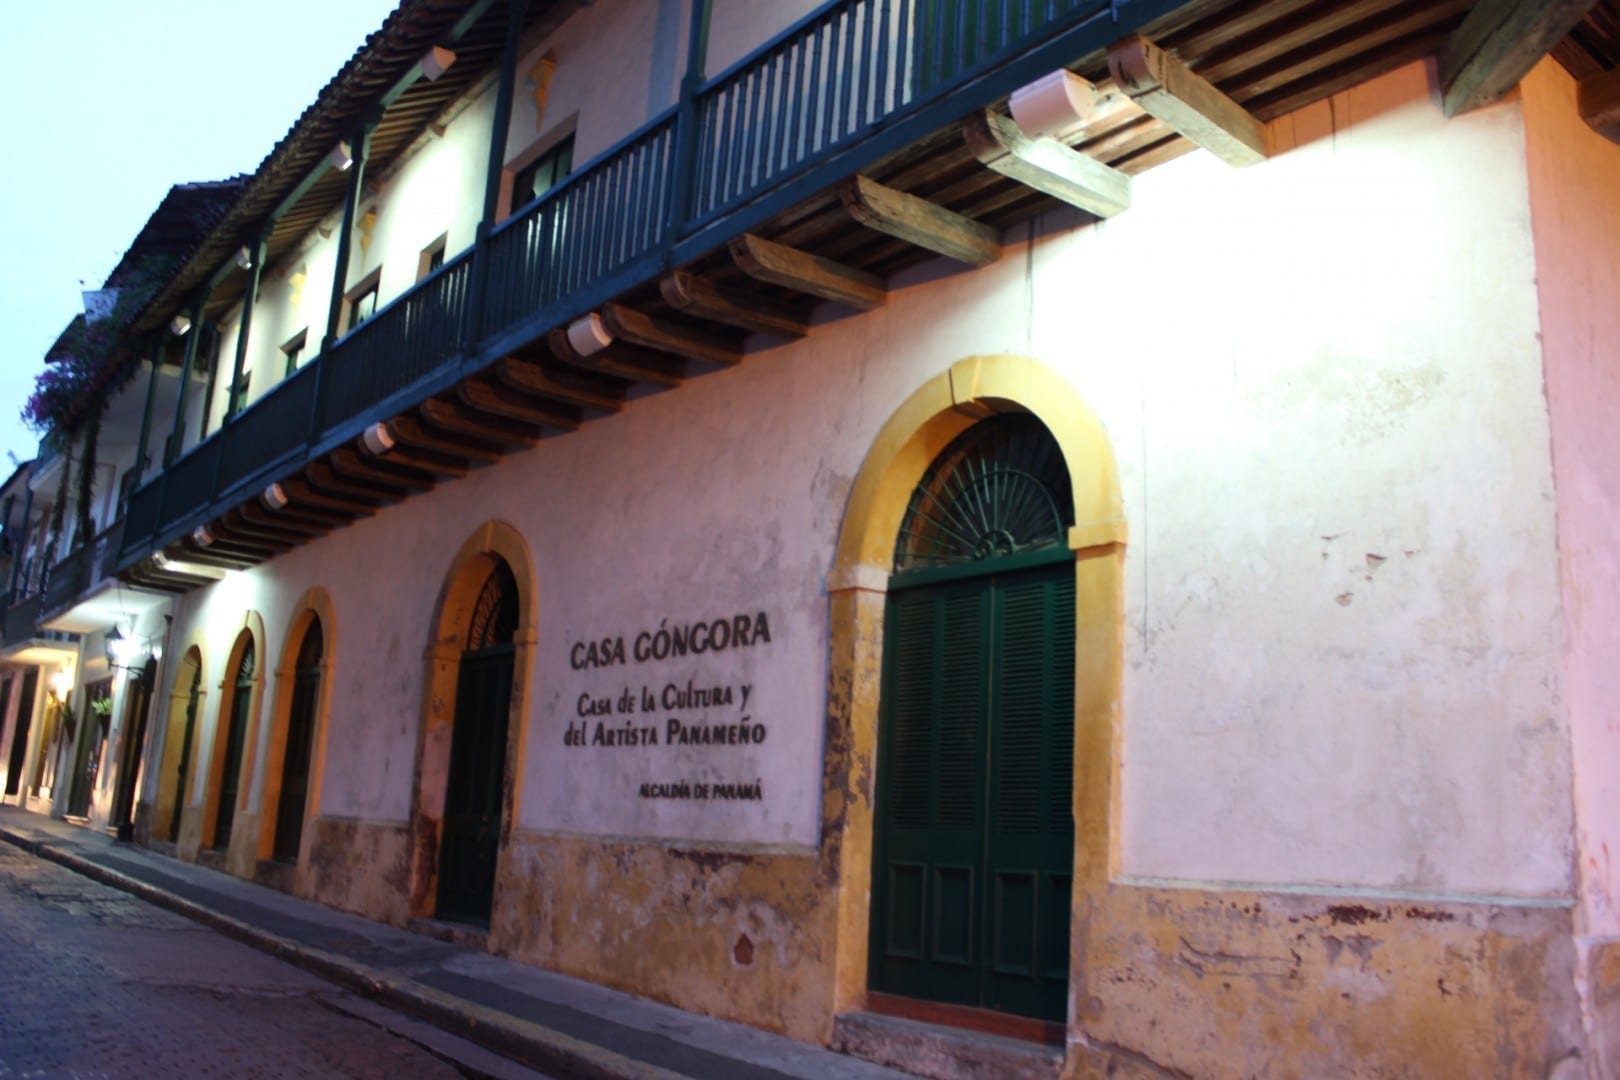 Casa Gongora, Casco Viejo Ciudad de Panamá Panamá